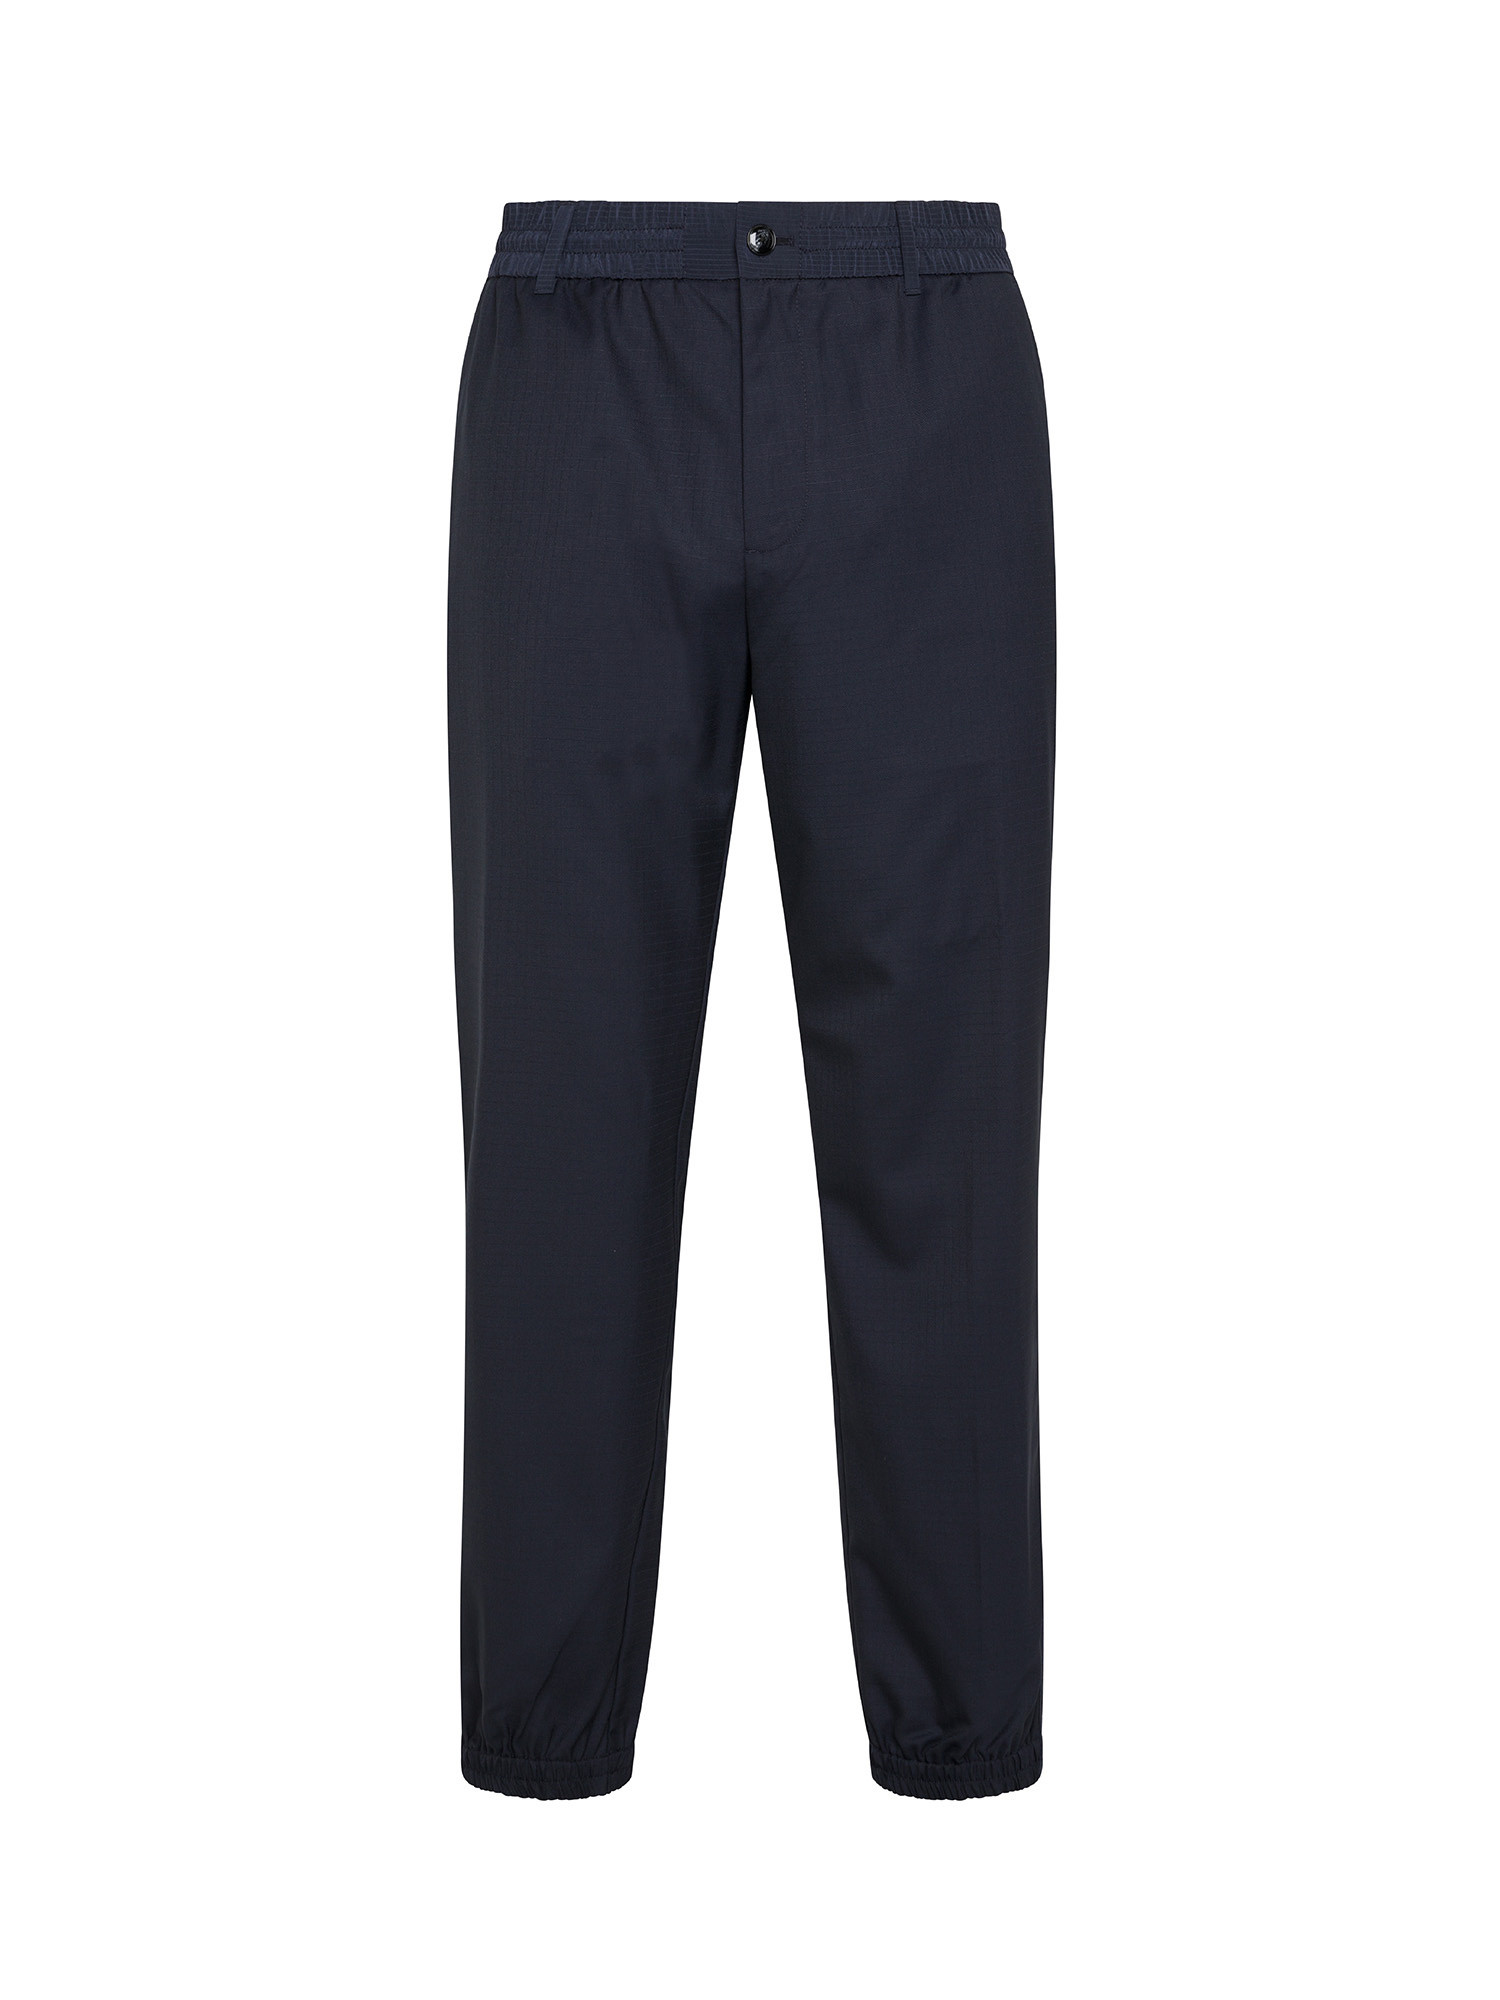 Emporio Armani - Pantaloni in misto lana, Blu scuro, large image number 0